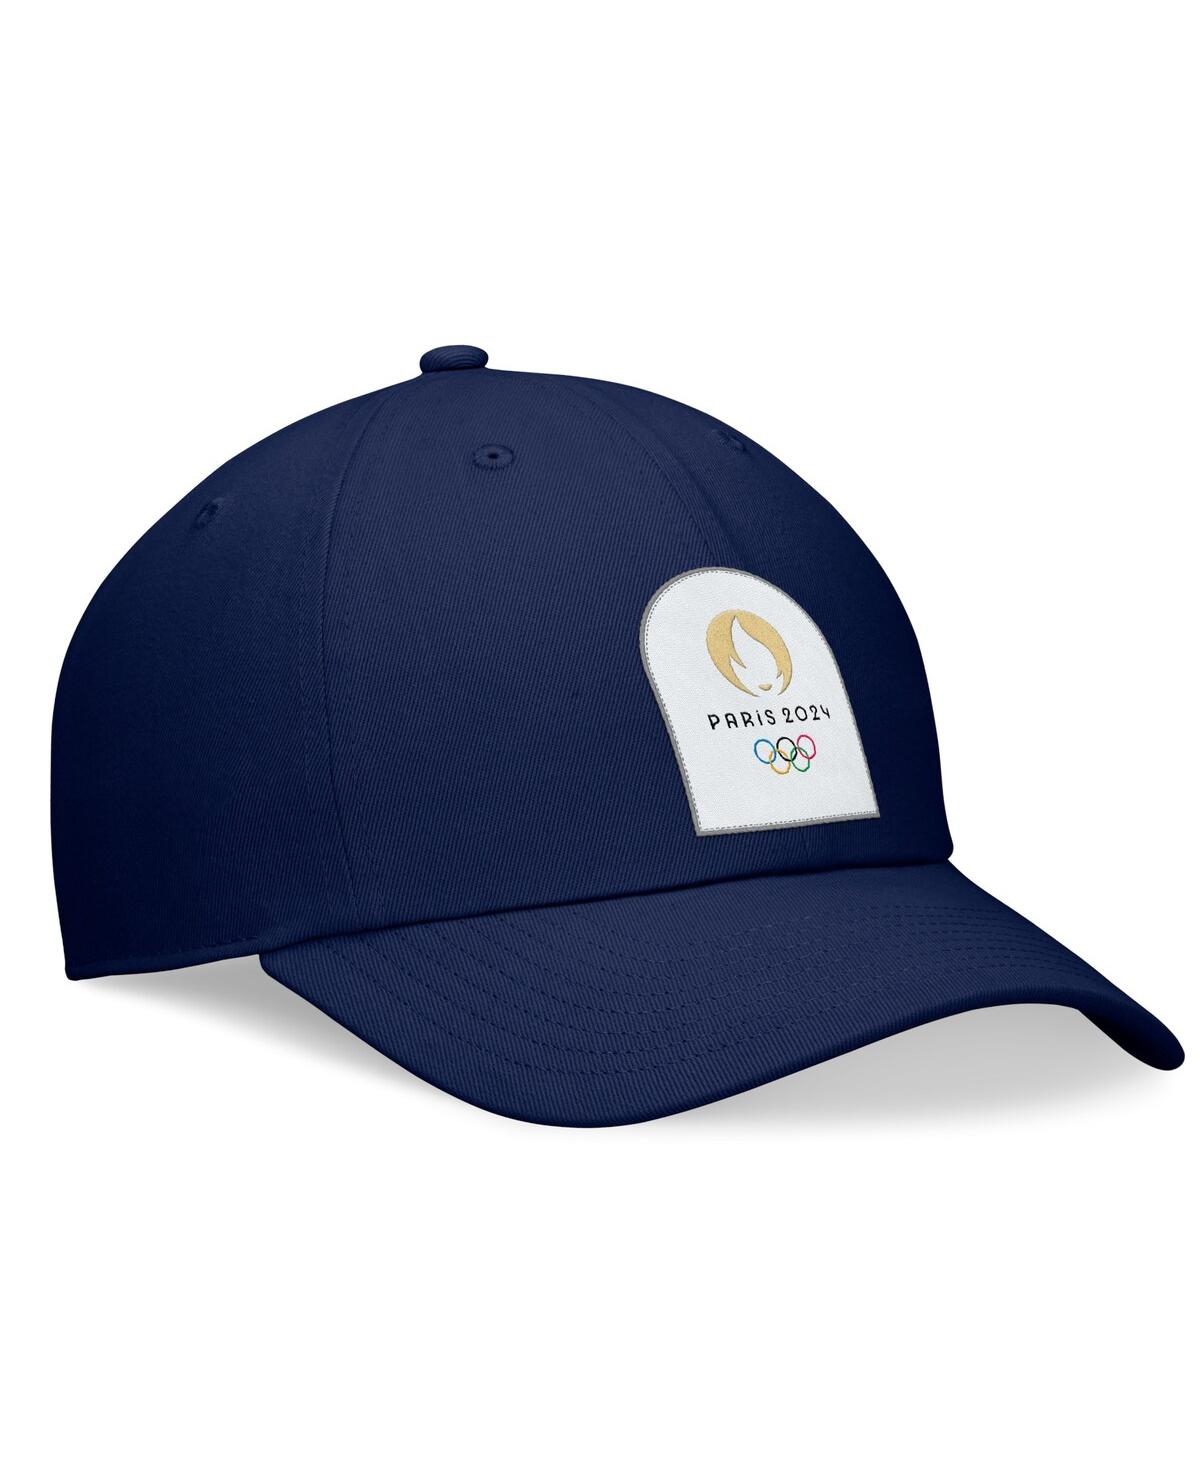 Shop Fanatics Branded Men's Navy Paris 2024 Summer Adjustable Hat